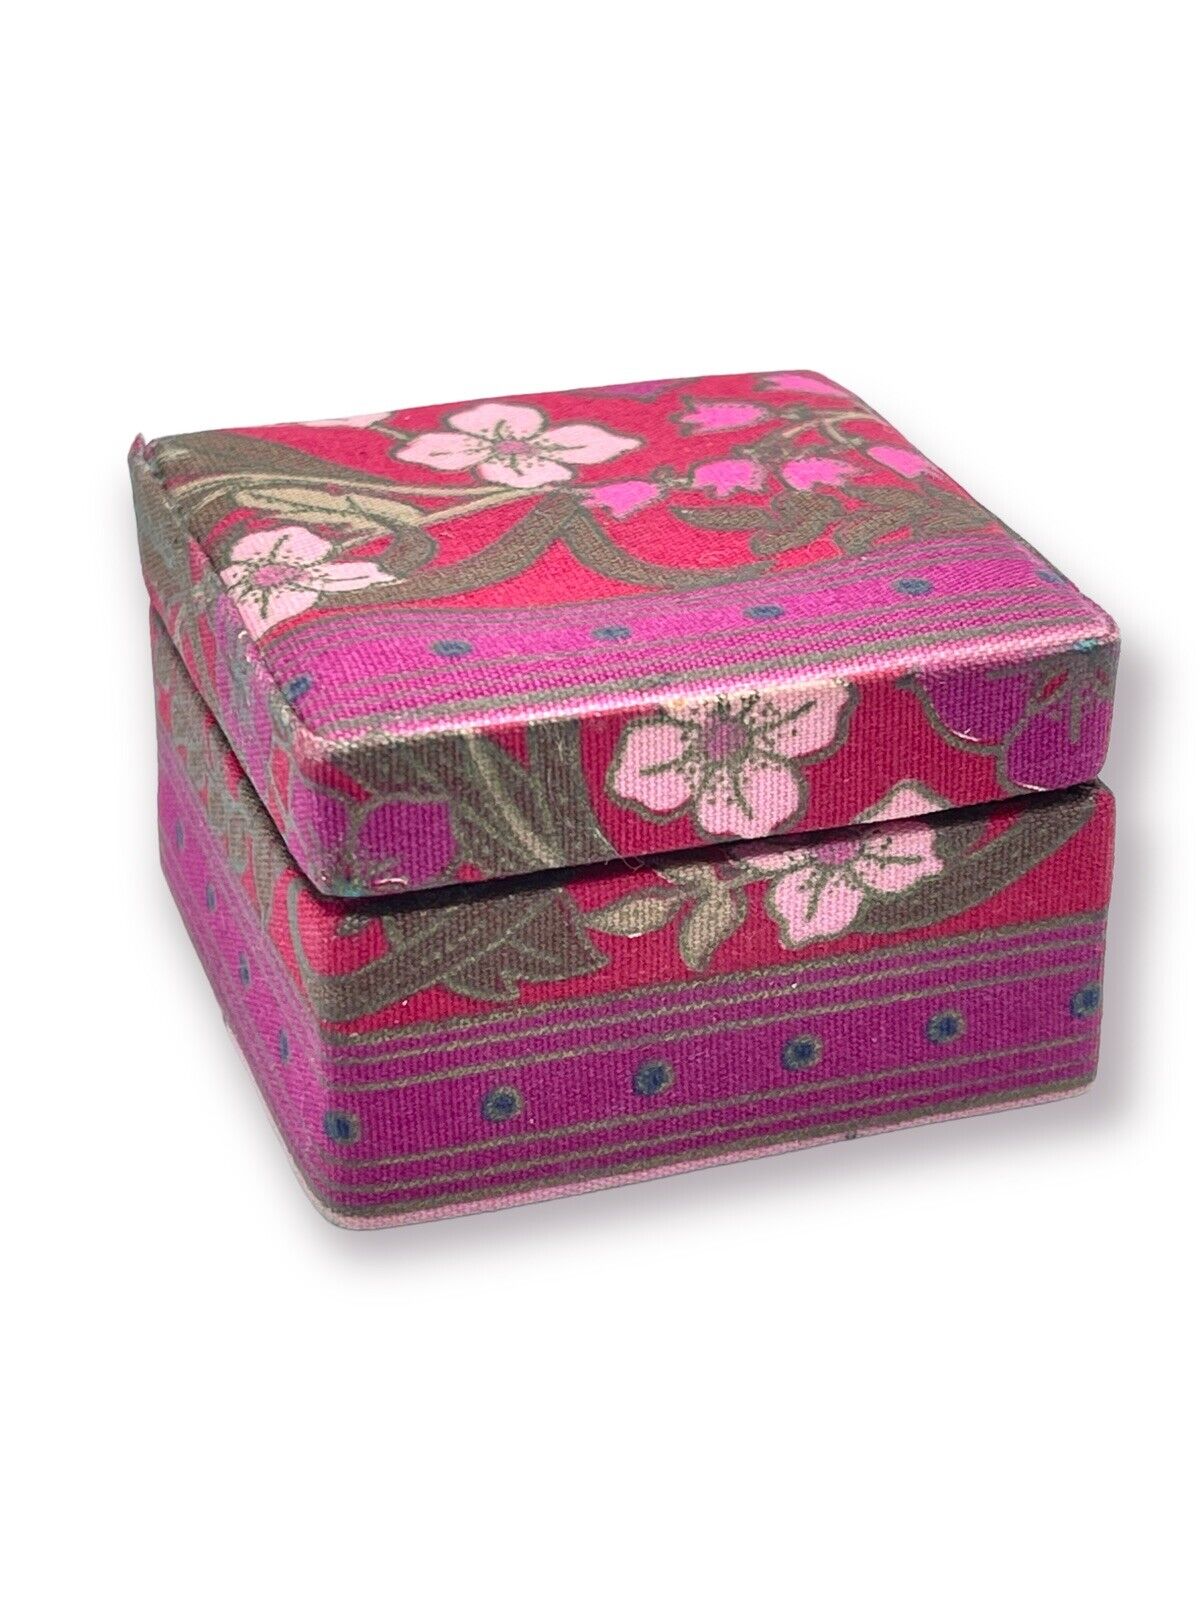 VTG Vintage Floral Anything Box Keepsake/Trinket Box with Lid